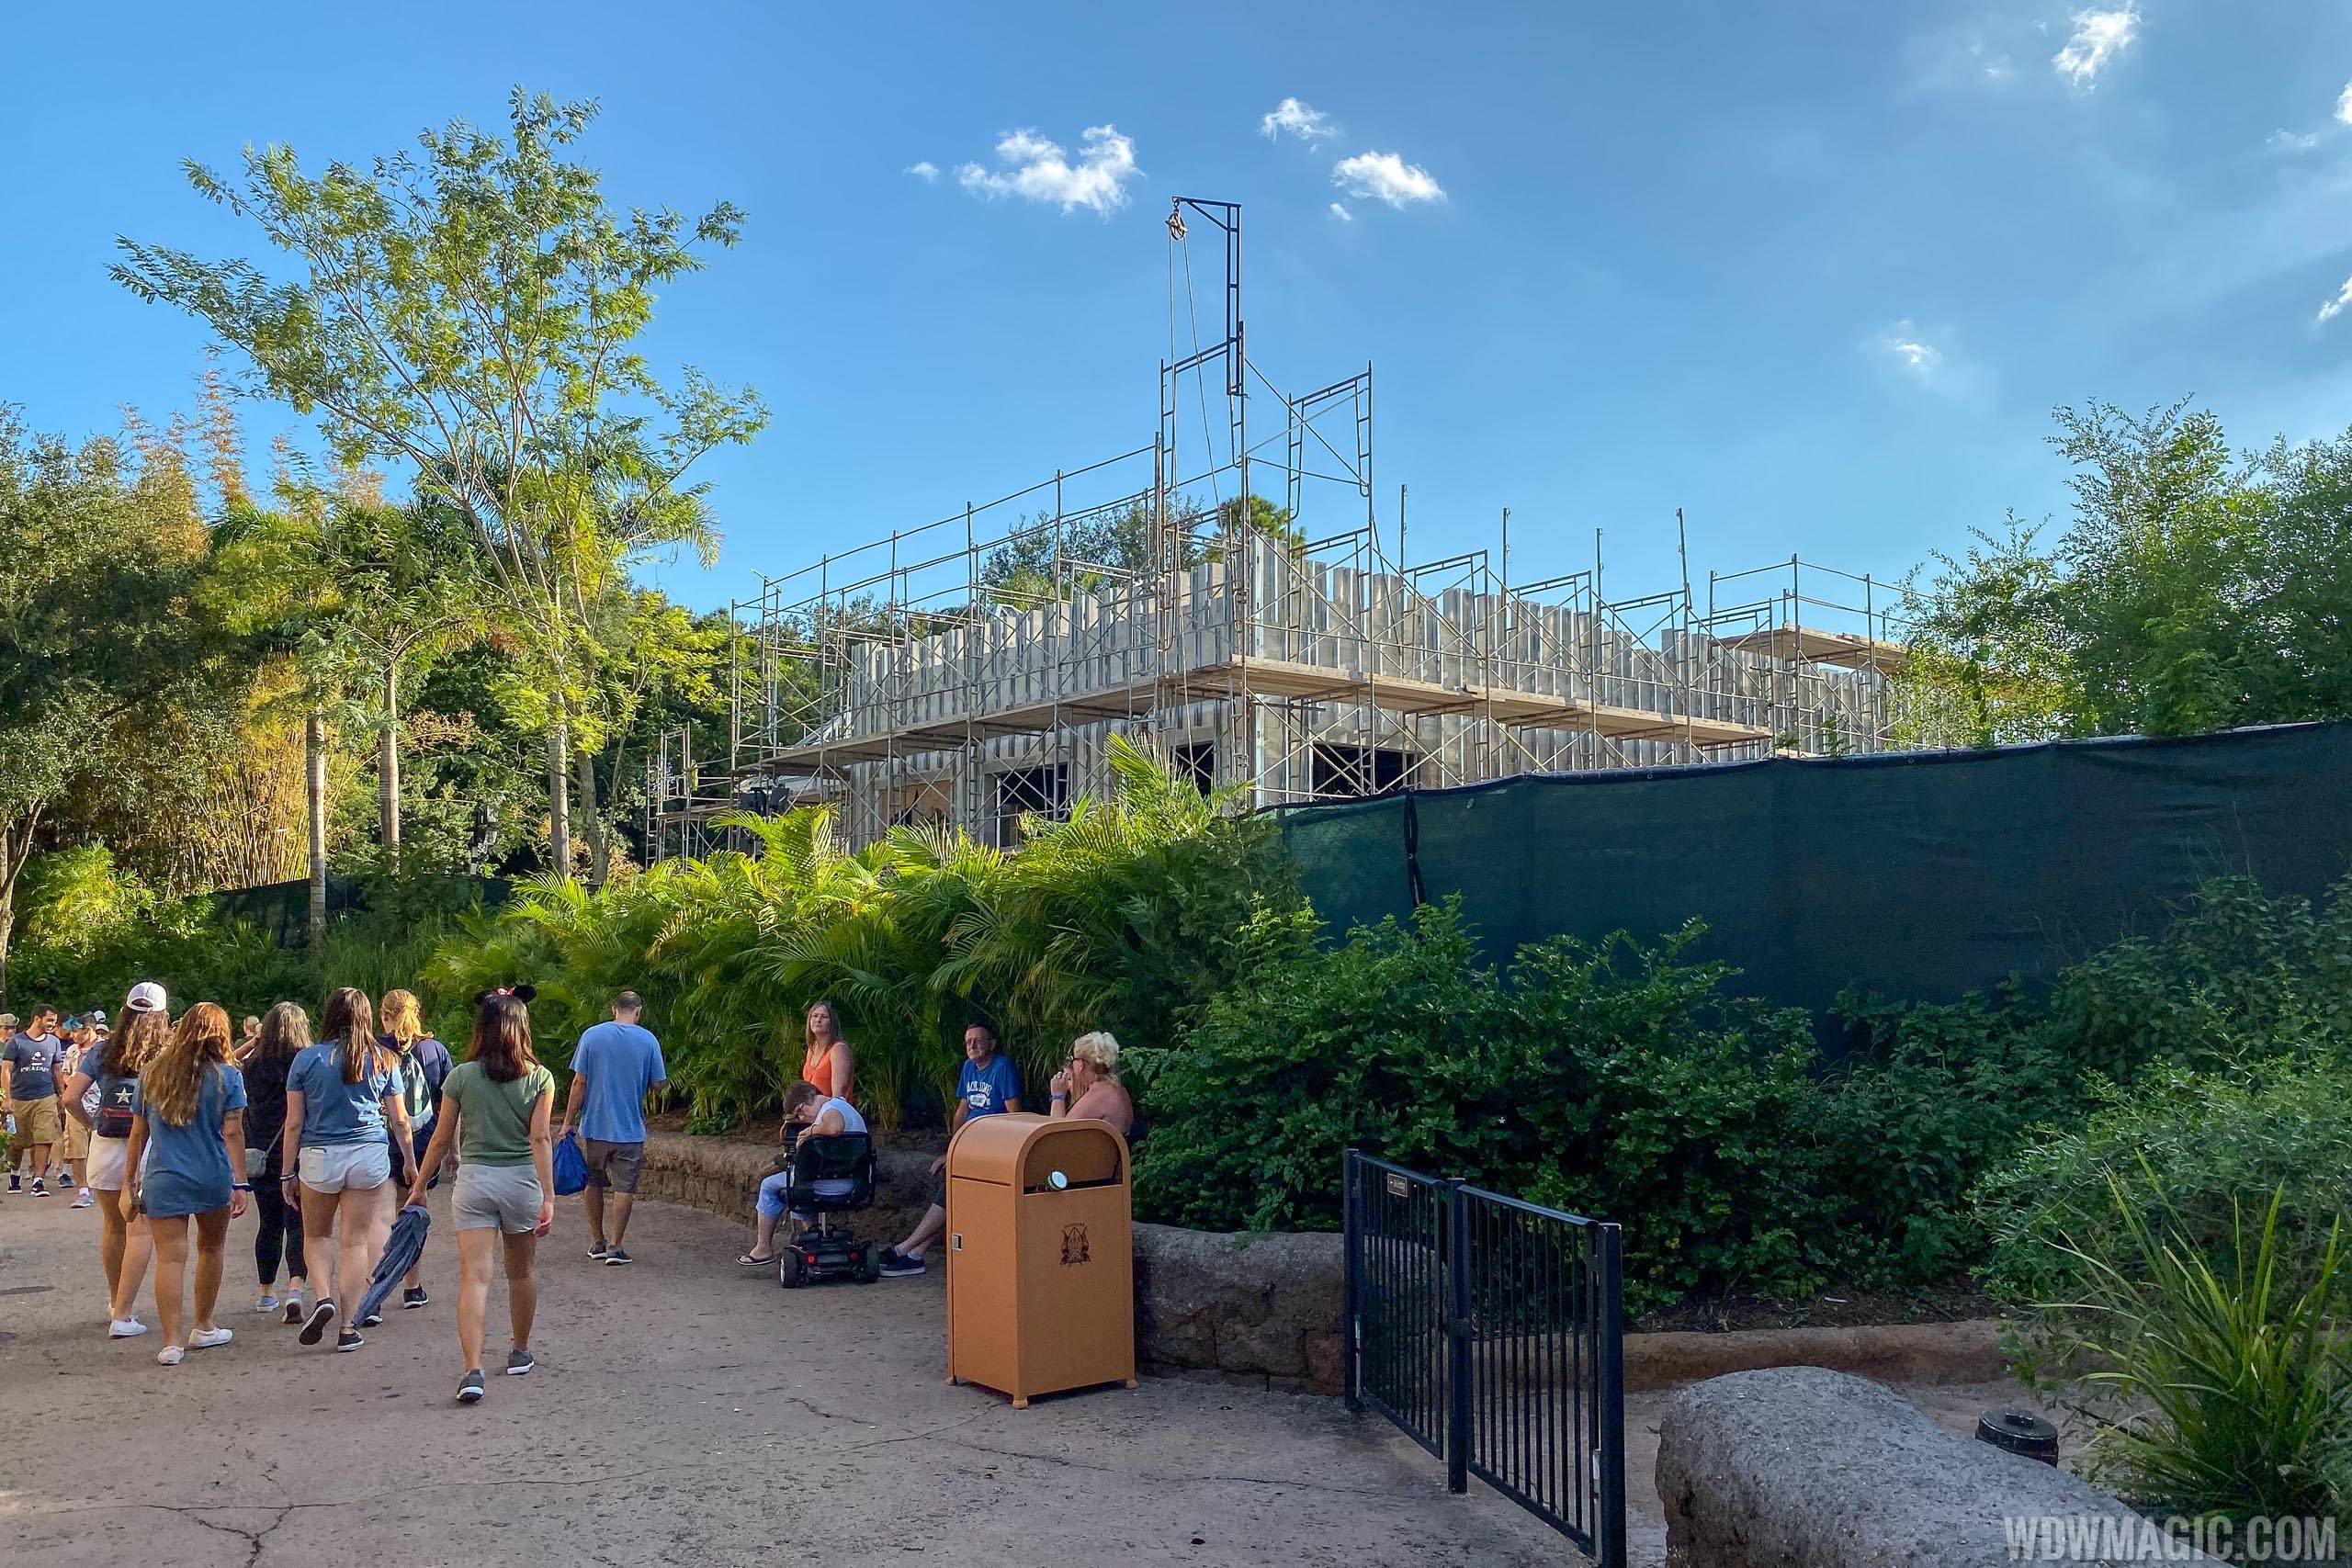 Club 33 Lounge construction at Disney's Animal Kingdom - September 2019